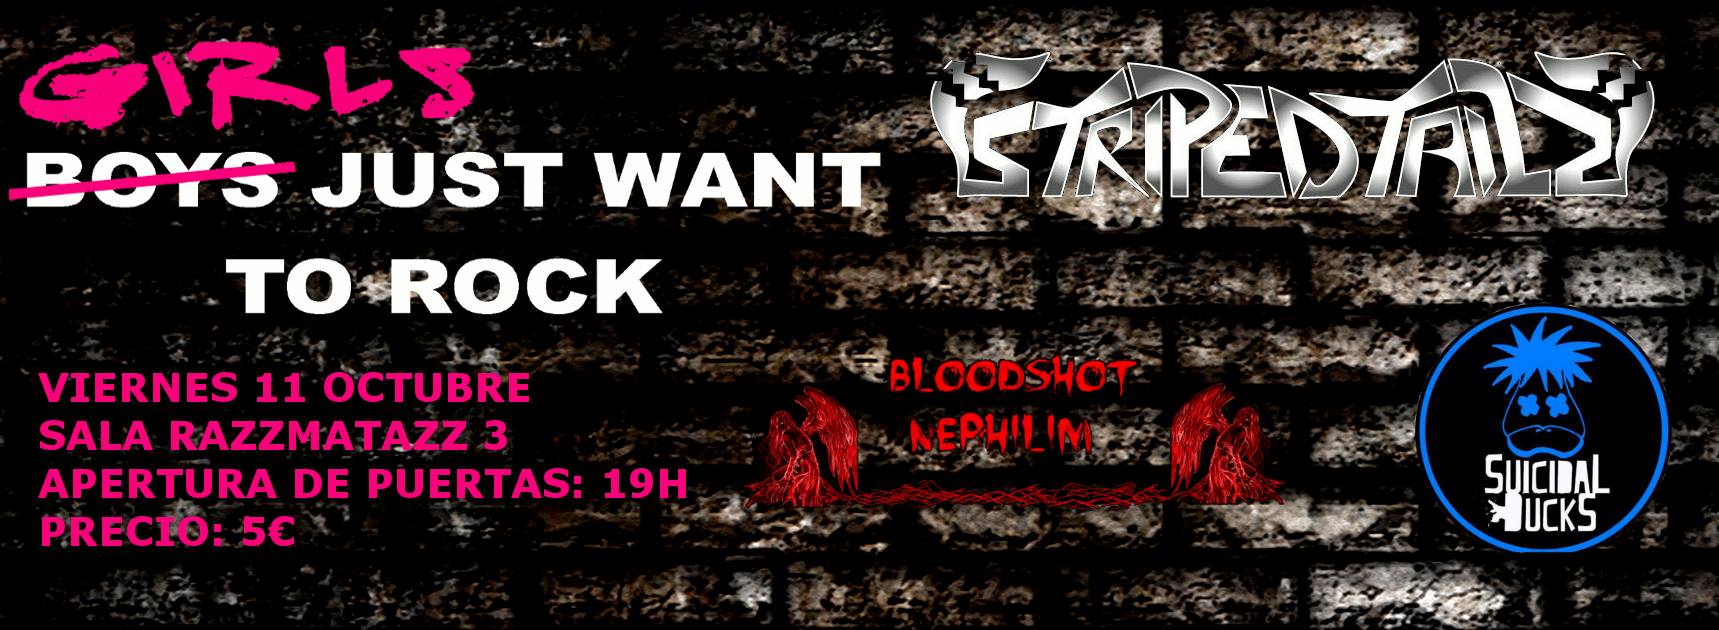 Striped Tails + Suicidal Ducks + Bloodshot Nephilim - 11/10/2013 Sala Razzmatazz 3 (Barcelona)